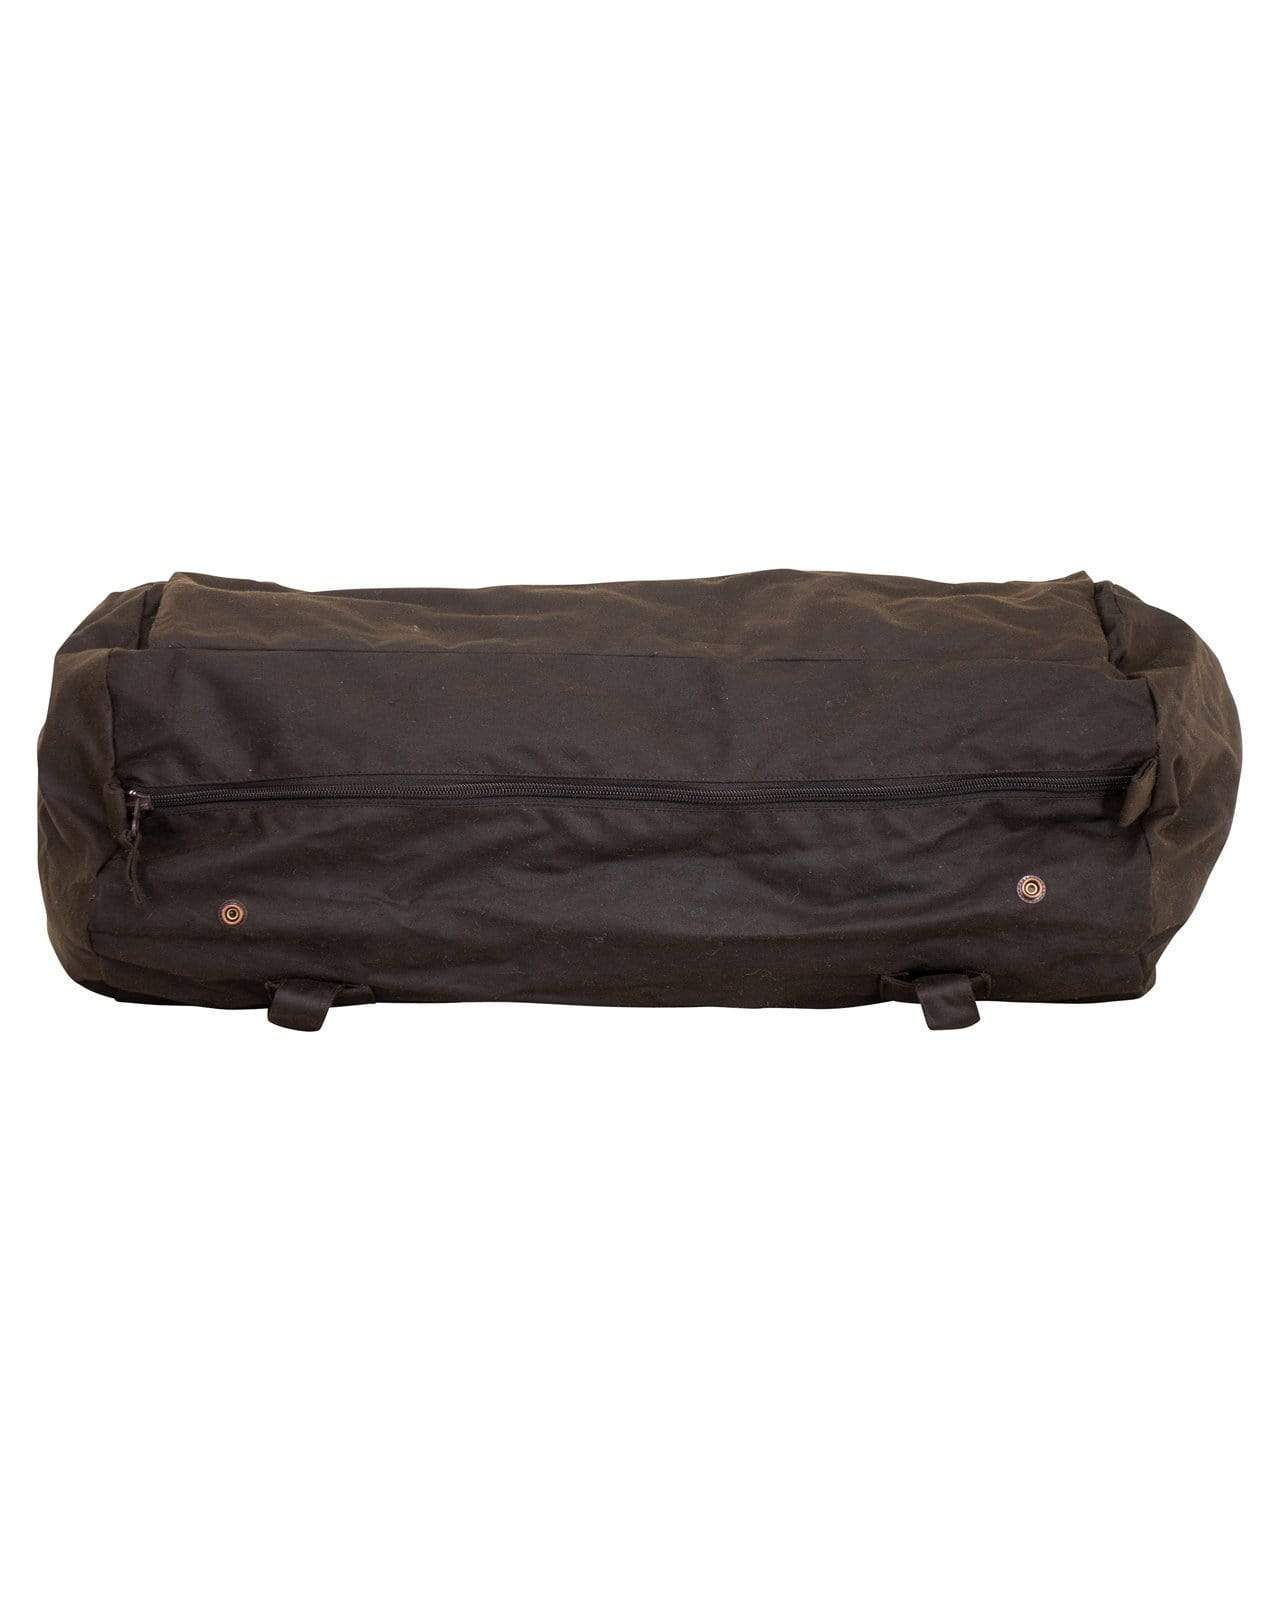 Soft Leather Cantle Bag – Australian Saddle Company